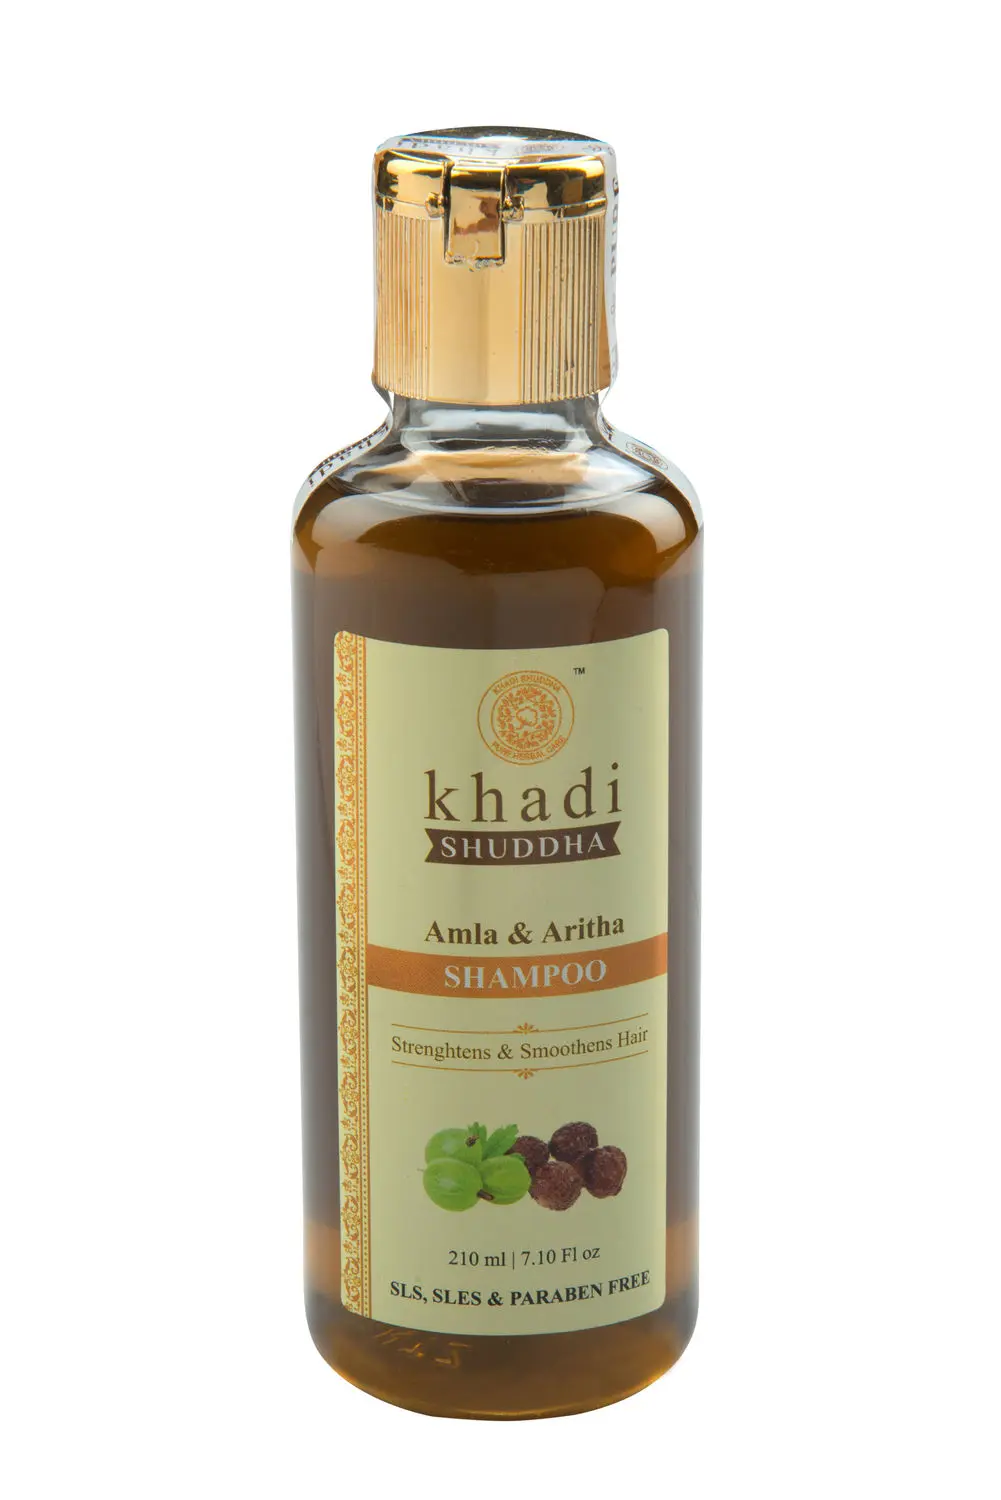 Khadi Shuddha Amla & Aritha Shampoo (210 ml)